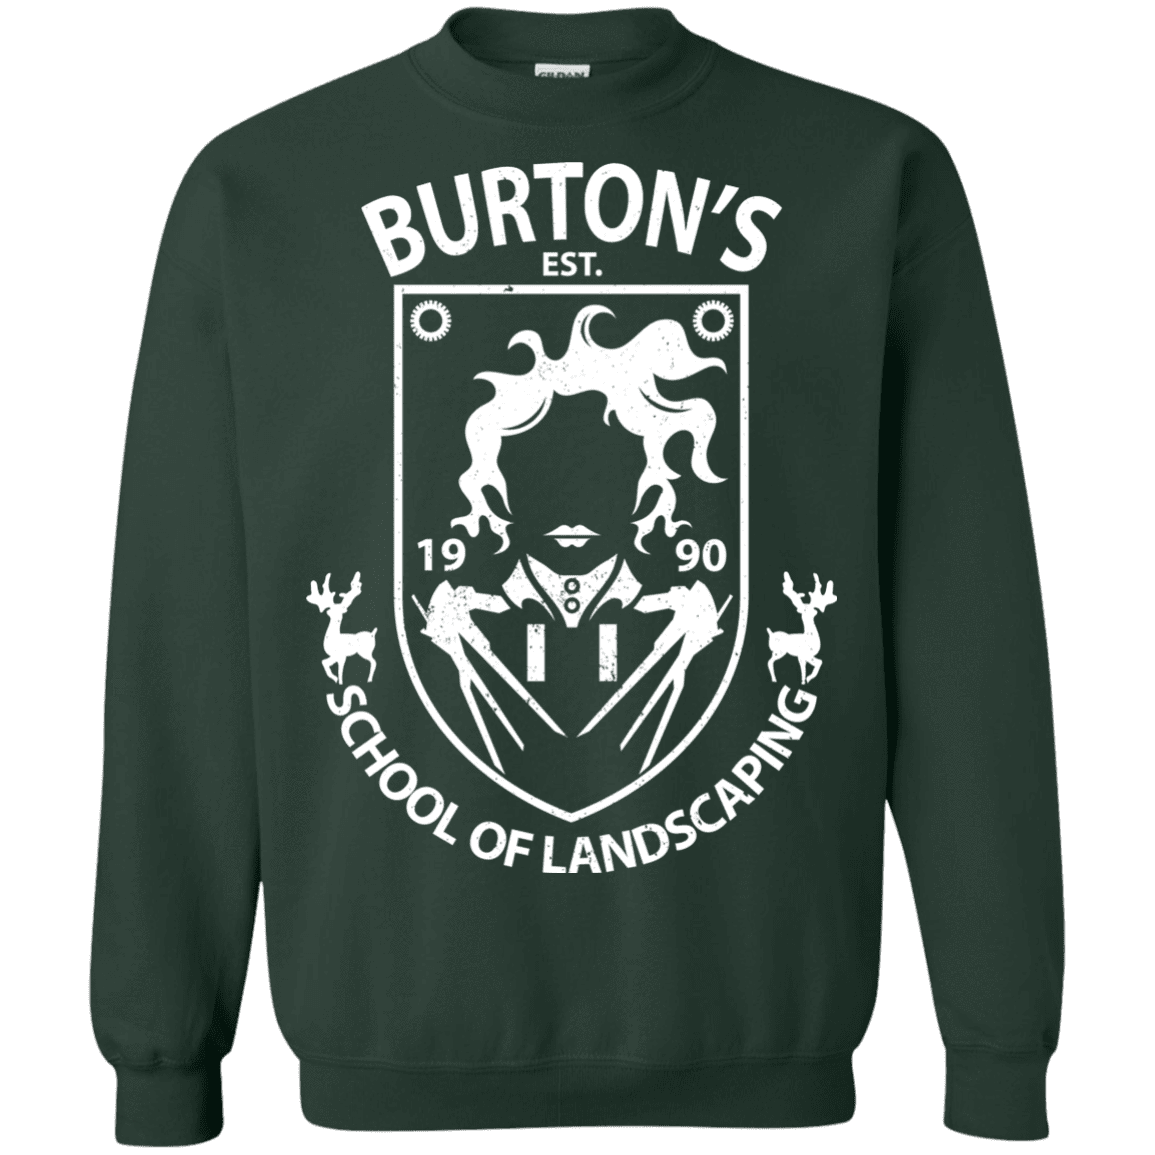 Sweatshirts Forest Green / Small Burtons School of Landscaping Crewneck Sweatshirt